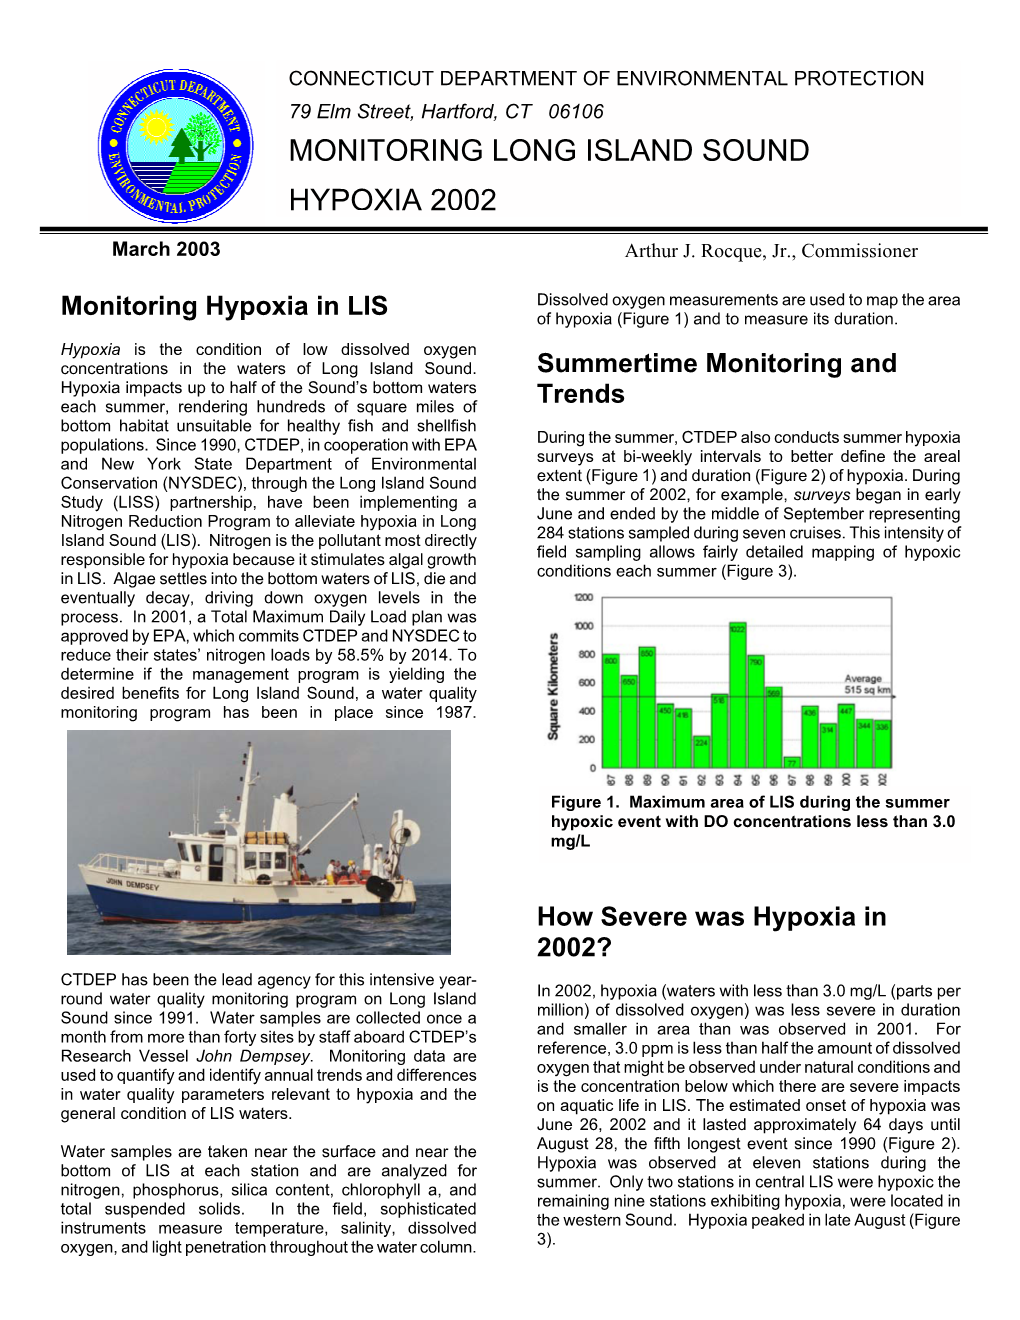 Monitoring Long Island Sound Hypoxia 2002